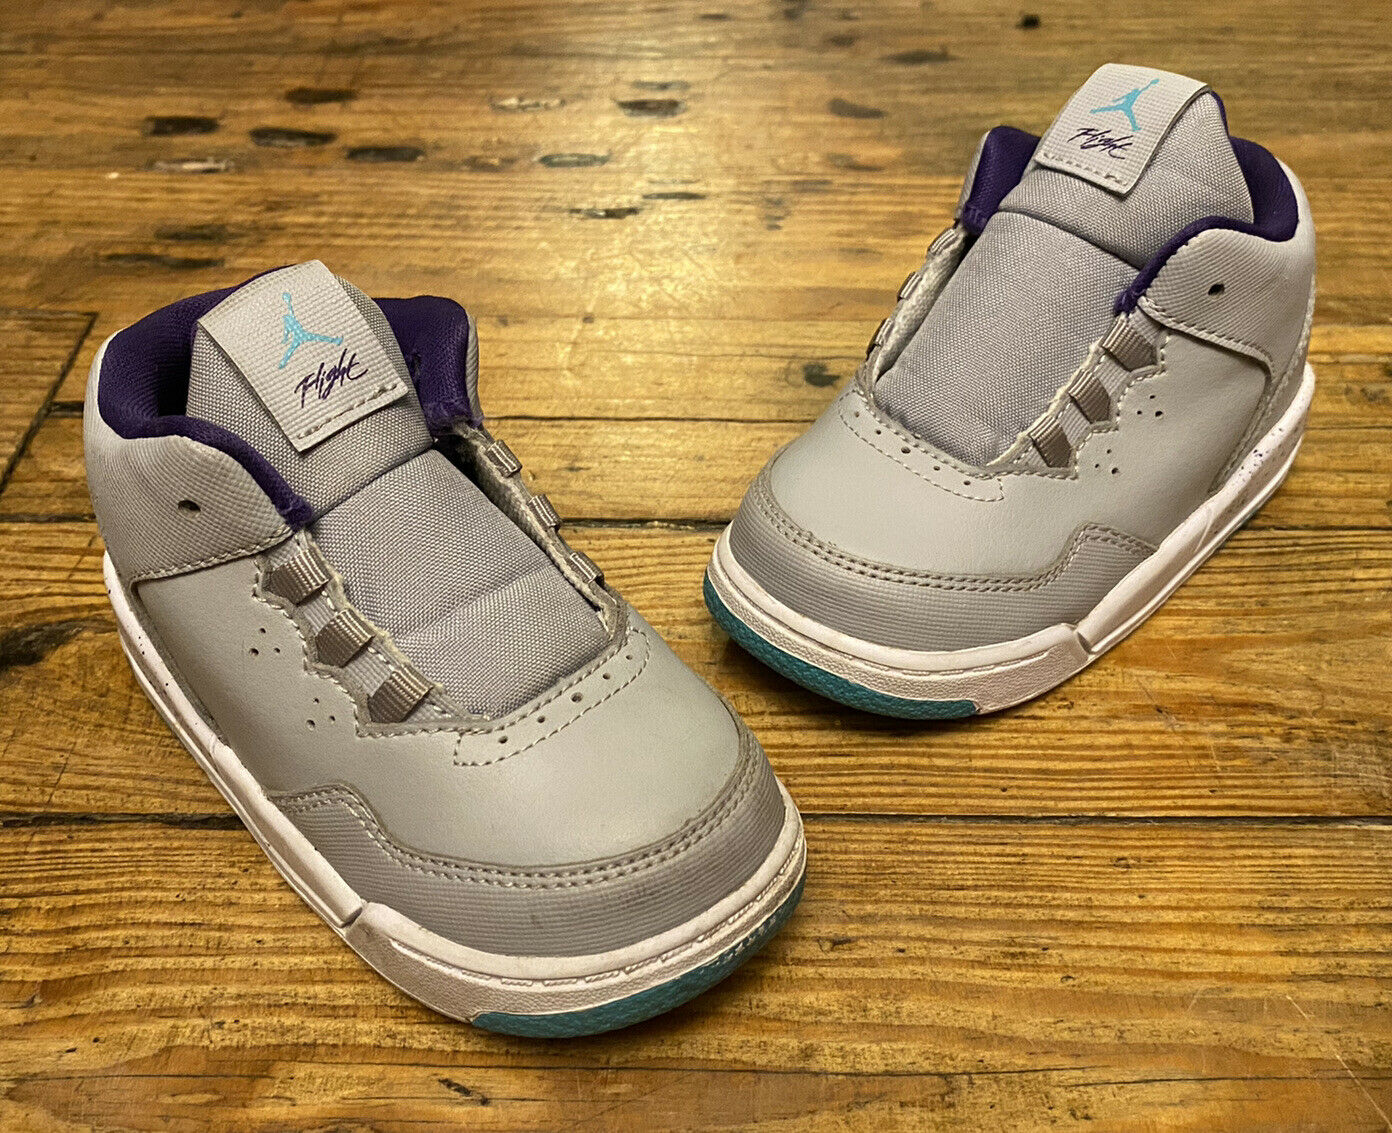 Nike Air Jordan Flight Shoes (Teal & Gray) Toddler Size 7C